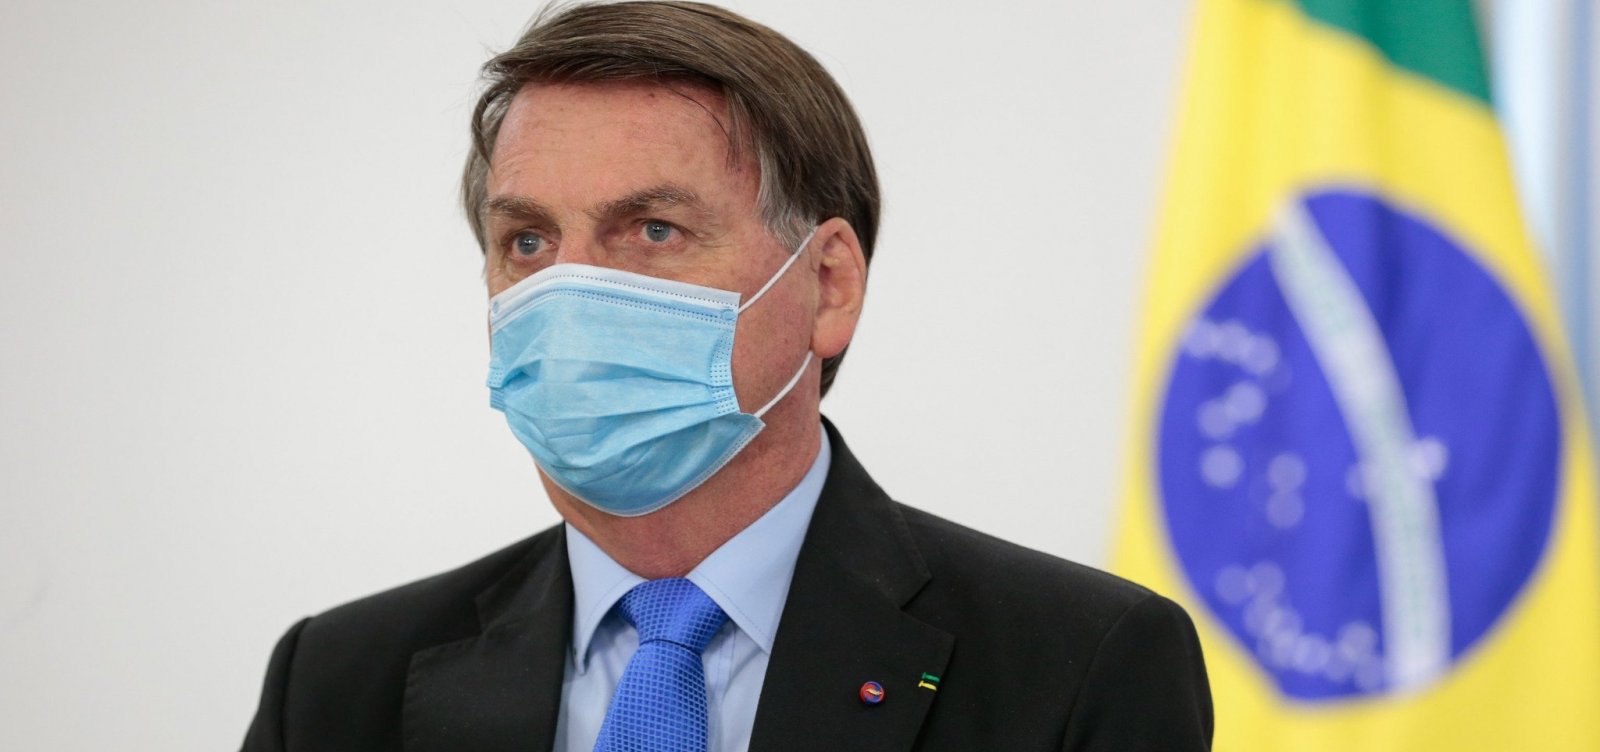 'Vamos tocar a vida', diz Bolsonaro sobre índice de 100 mil mortes por coronavírus